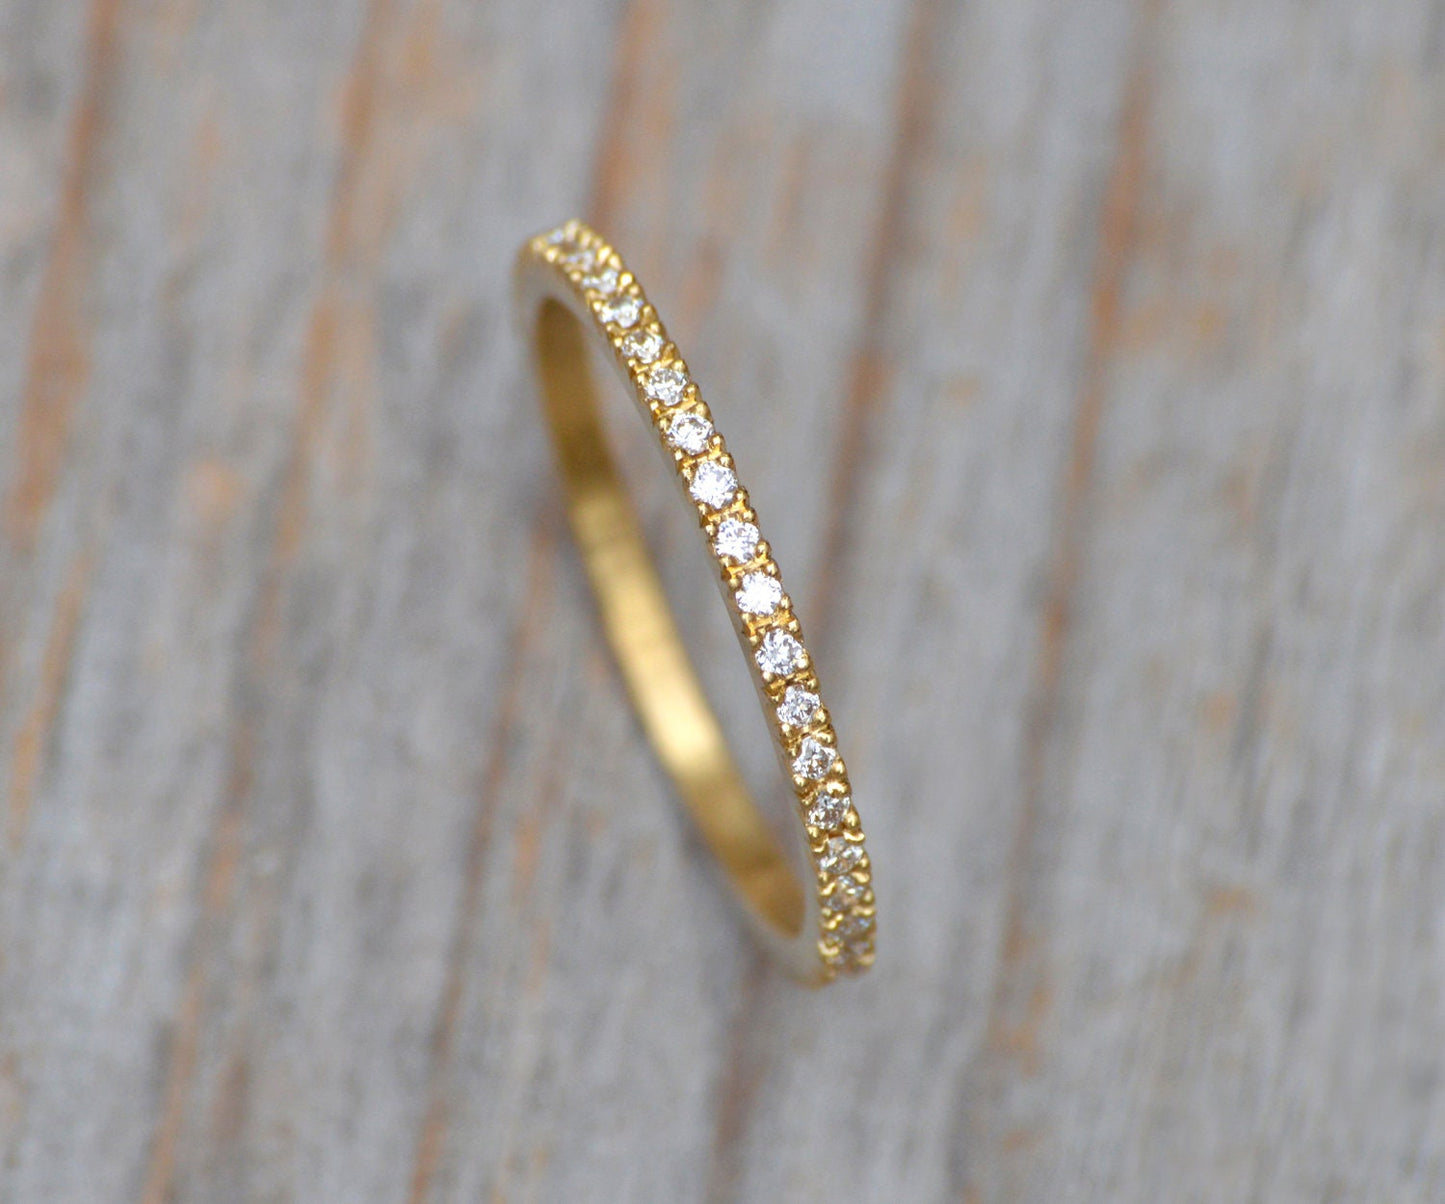 Pave Eternity Ring, Pave Diamond Wedding Ring, Diamond Eternity Ring, Eternity Wedding Ring, UK size J